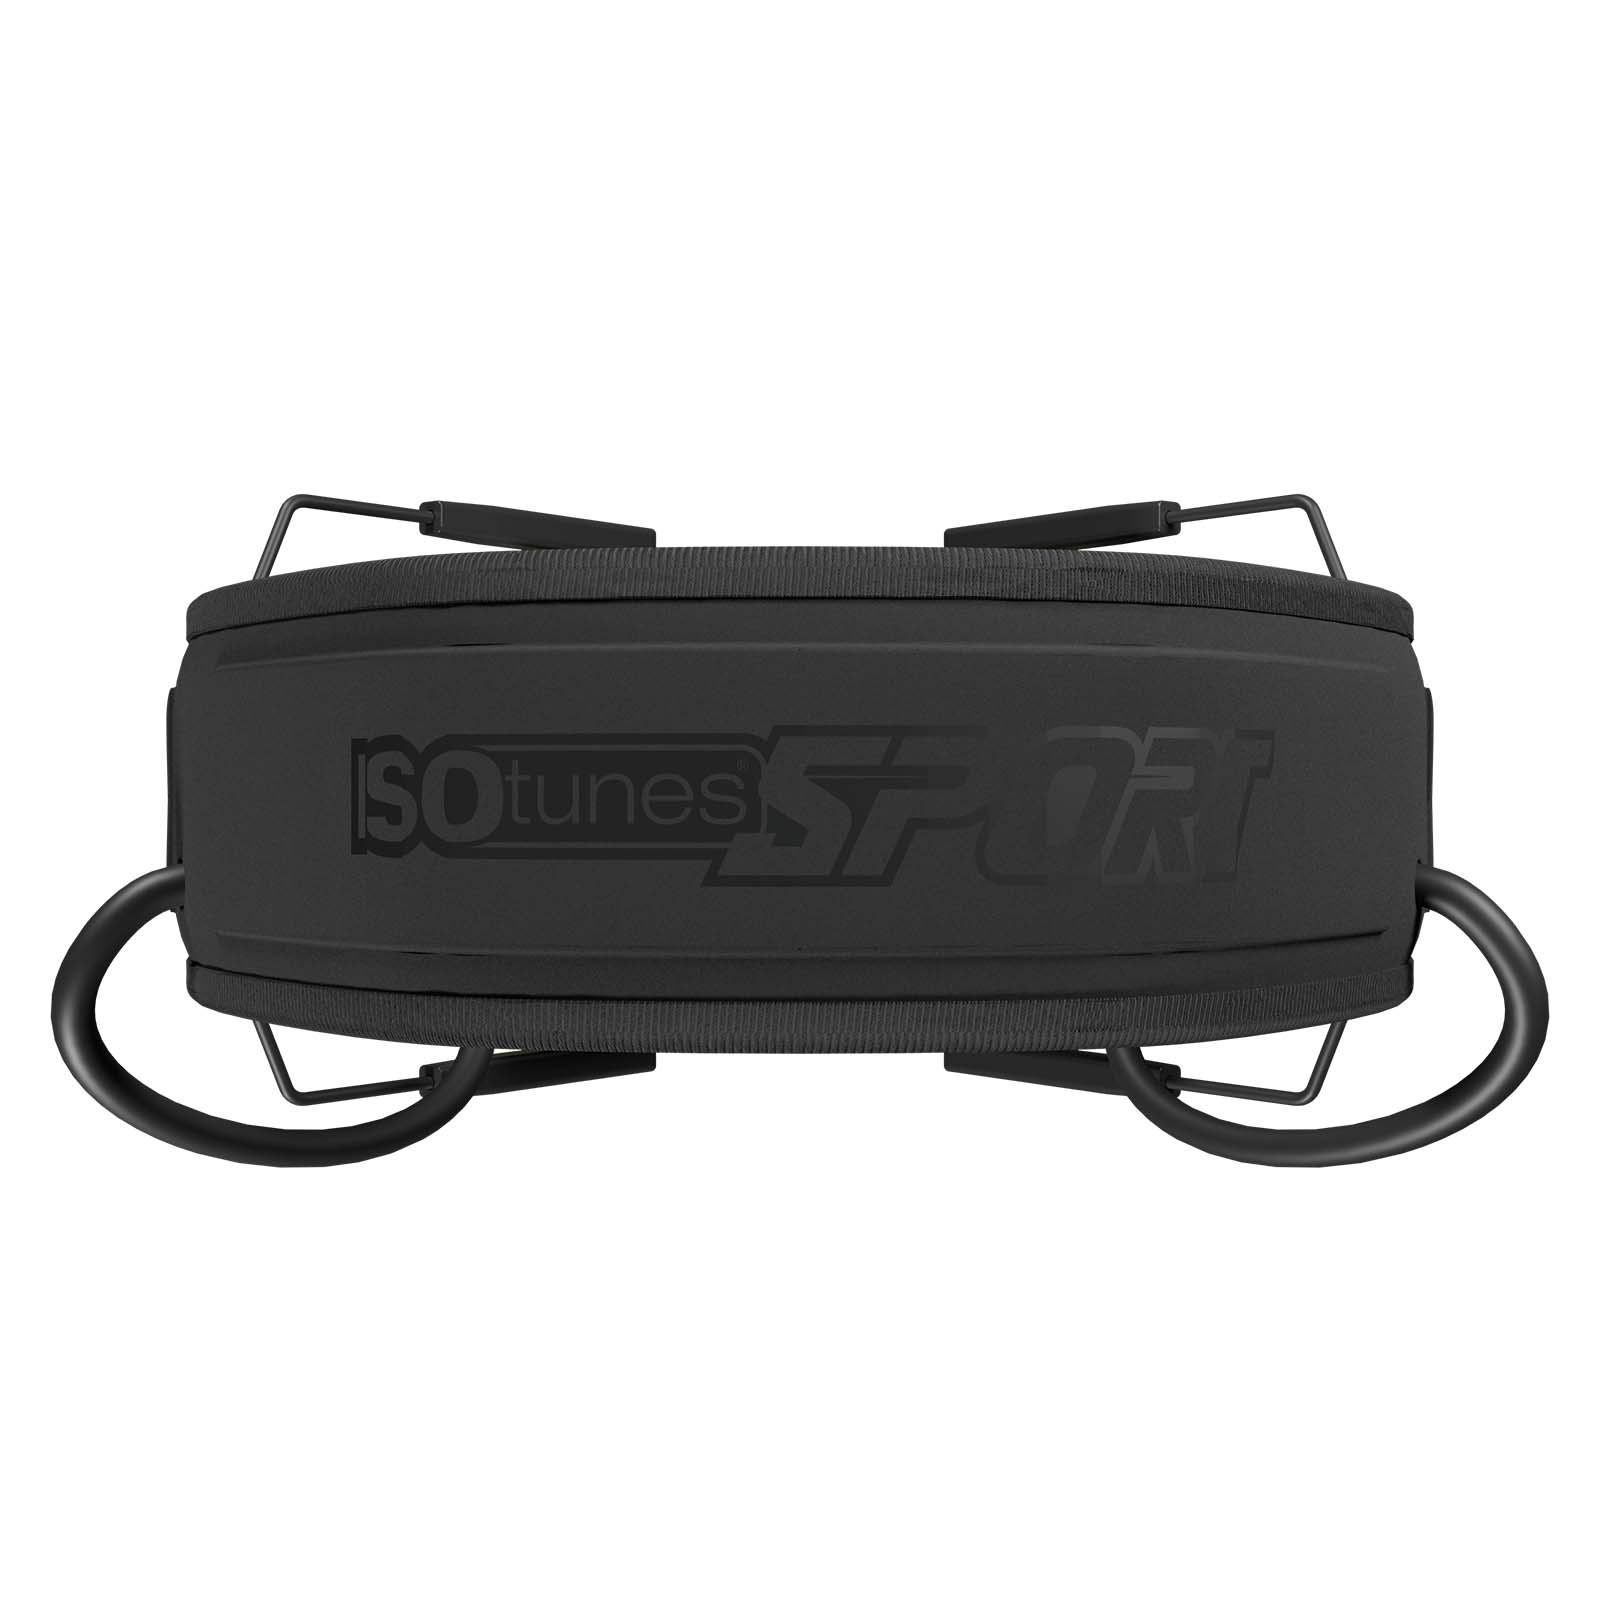 ISOTUNES Sport Defy Slim Basic, grün, ohne Bluetooth